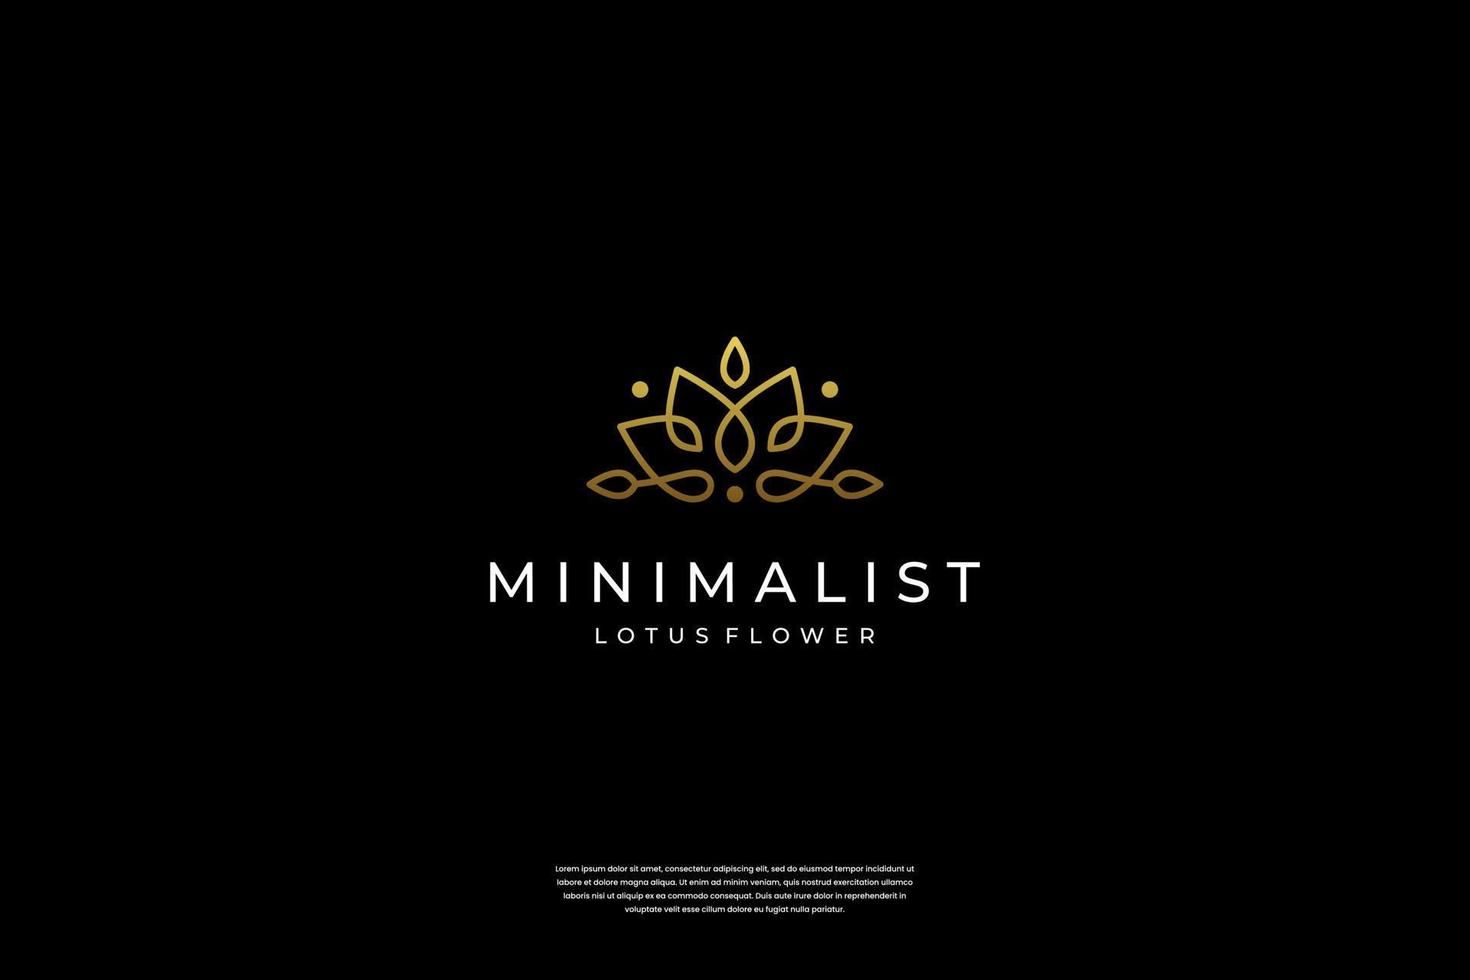 Minimalist elegant Lotus flower logo design with line art style vector